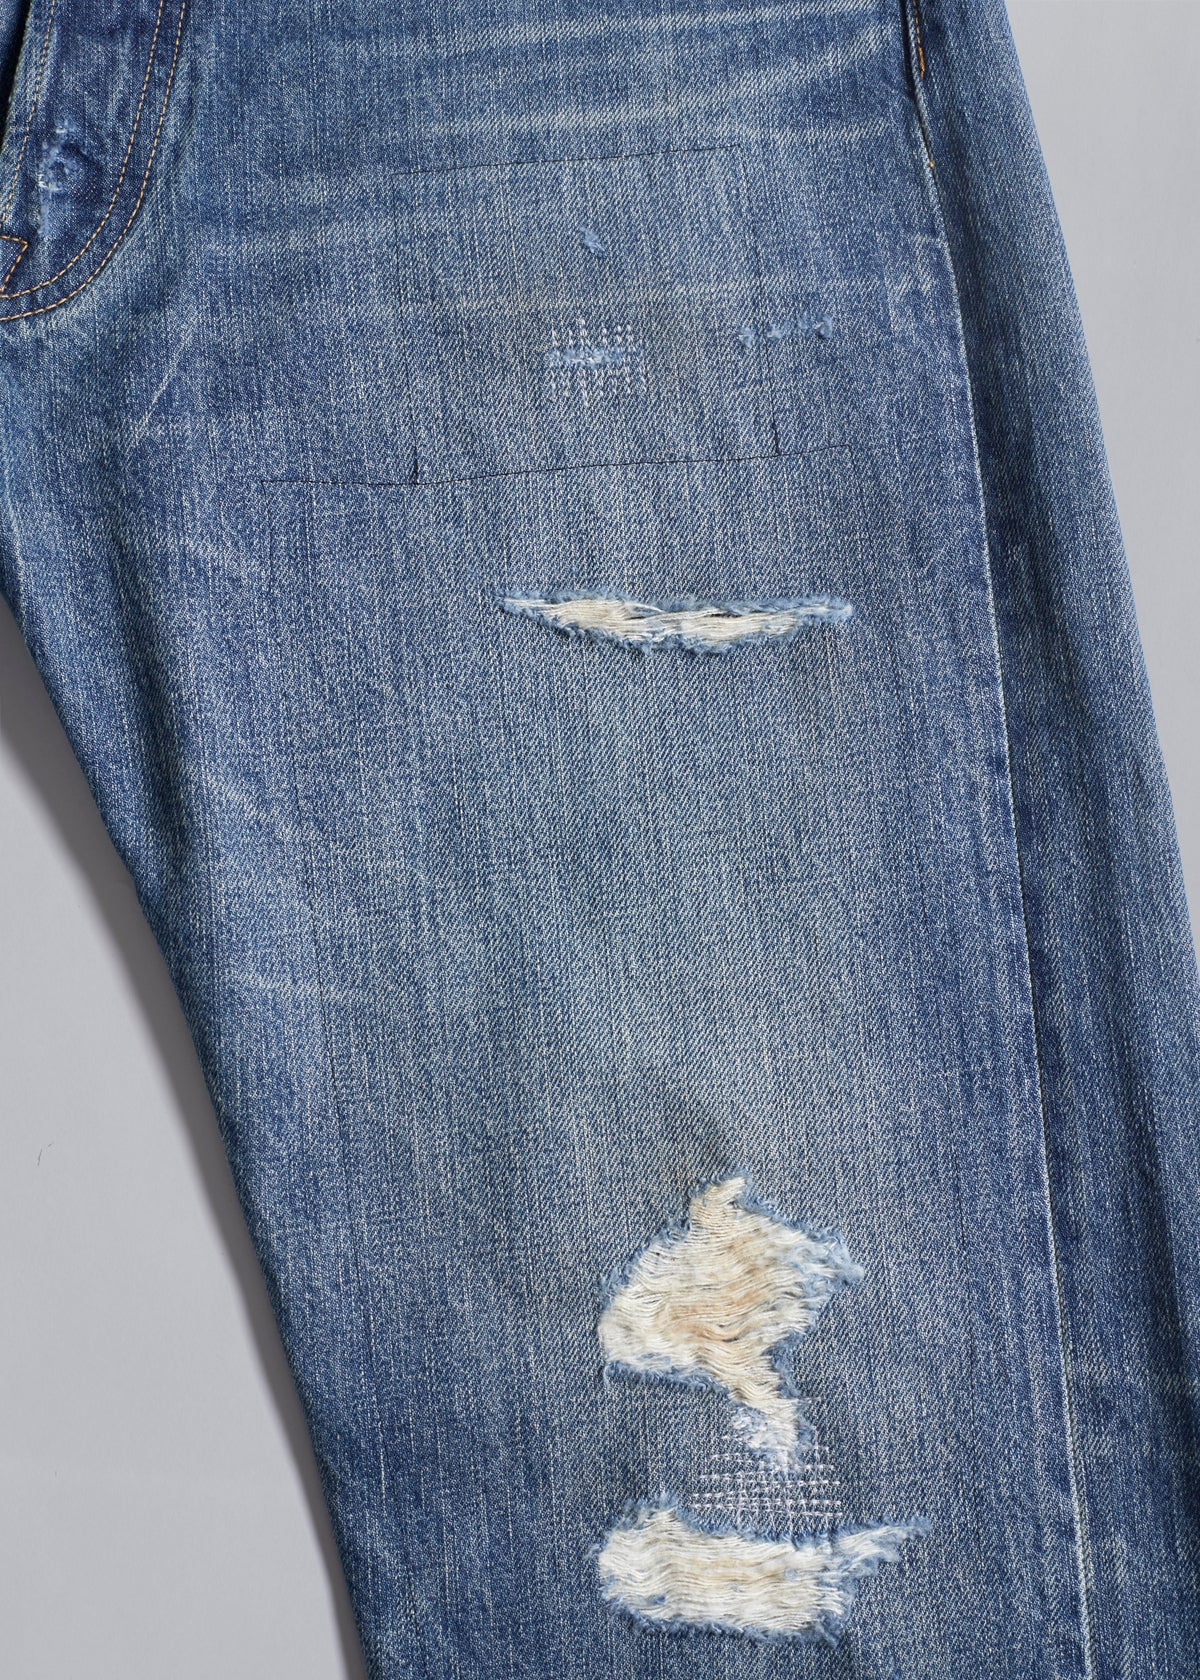 Junya Watanabe/Levi's 501XX Distressed Jeans AW2019 - 32